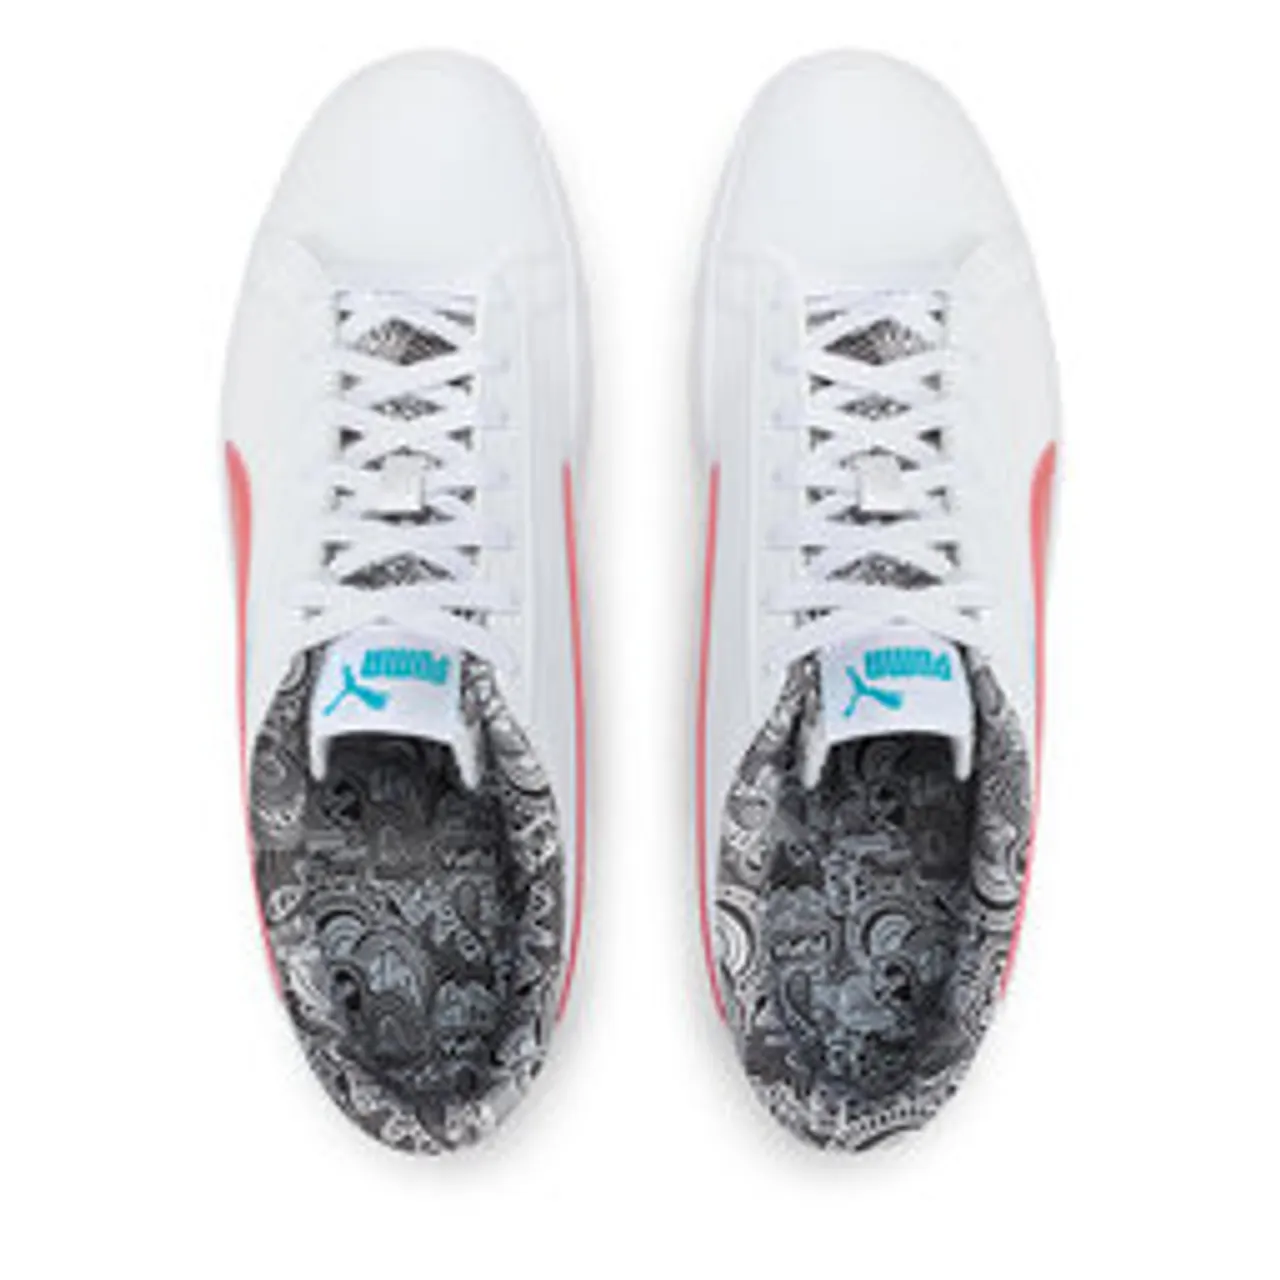 Sneakers Puma Smash V2 Me Happy 386396 01 White/Red/Blue/Atoll/Black